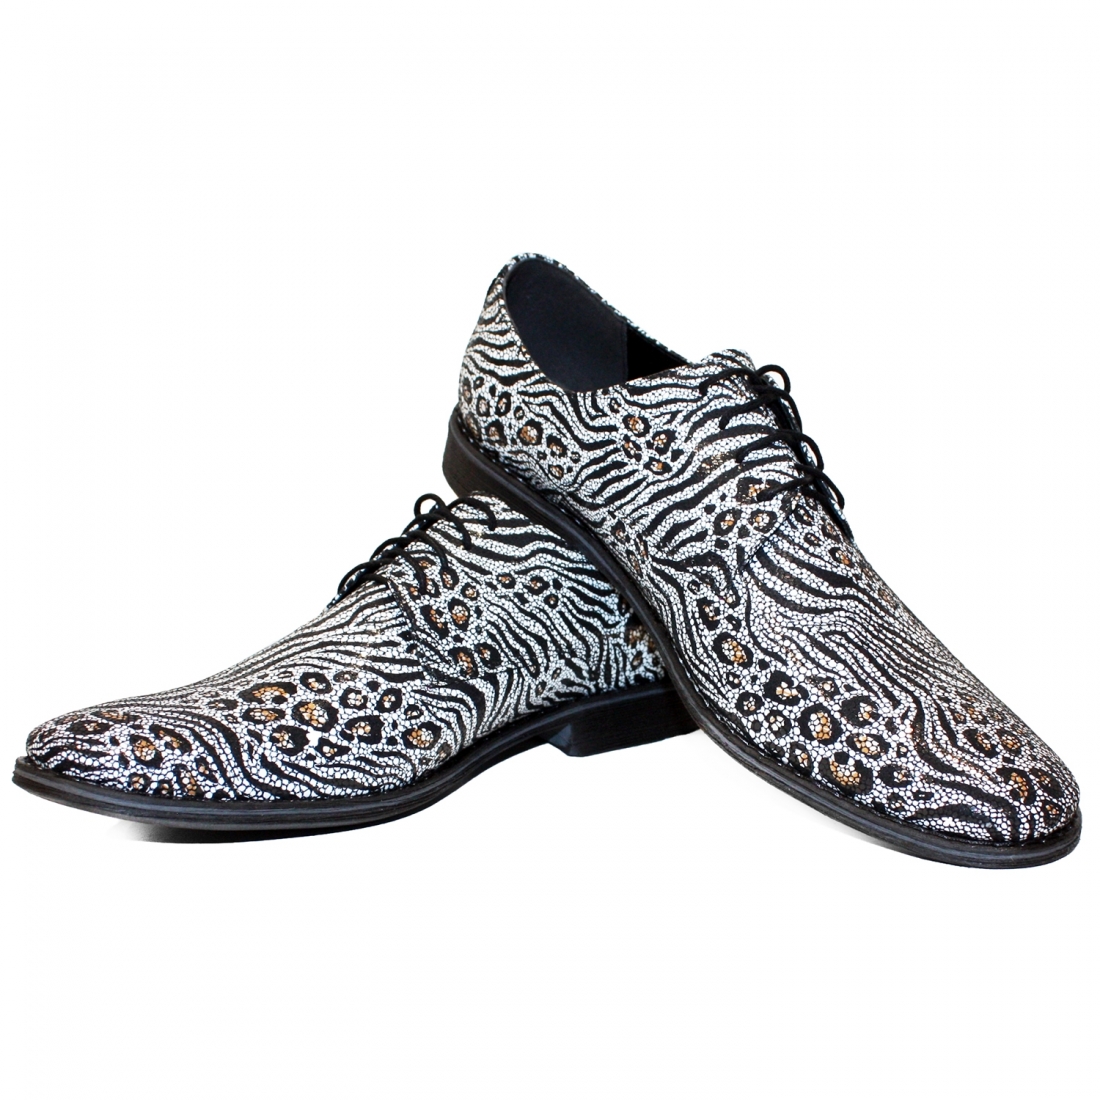 Modello Zeberro - Классическая обувь - Handmade Colorful Italian Leather Shoes